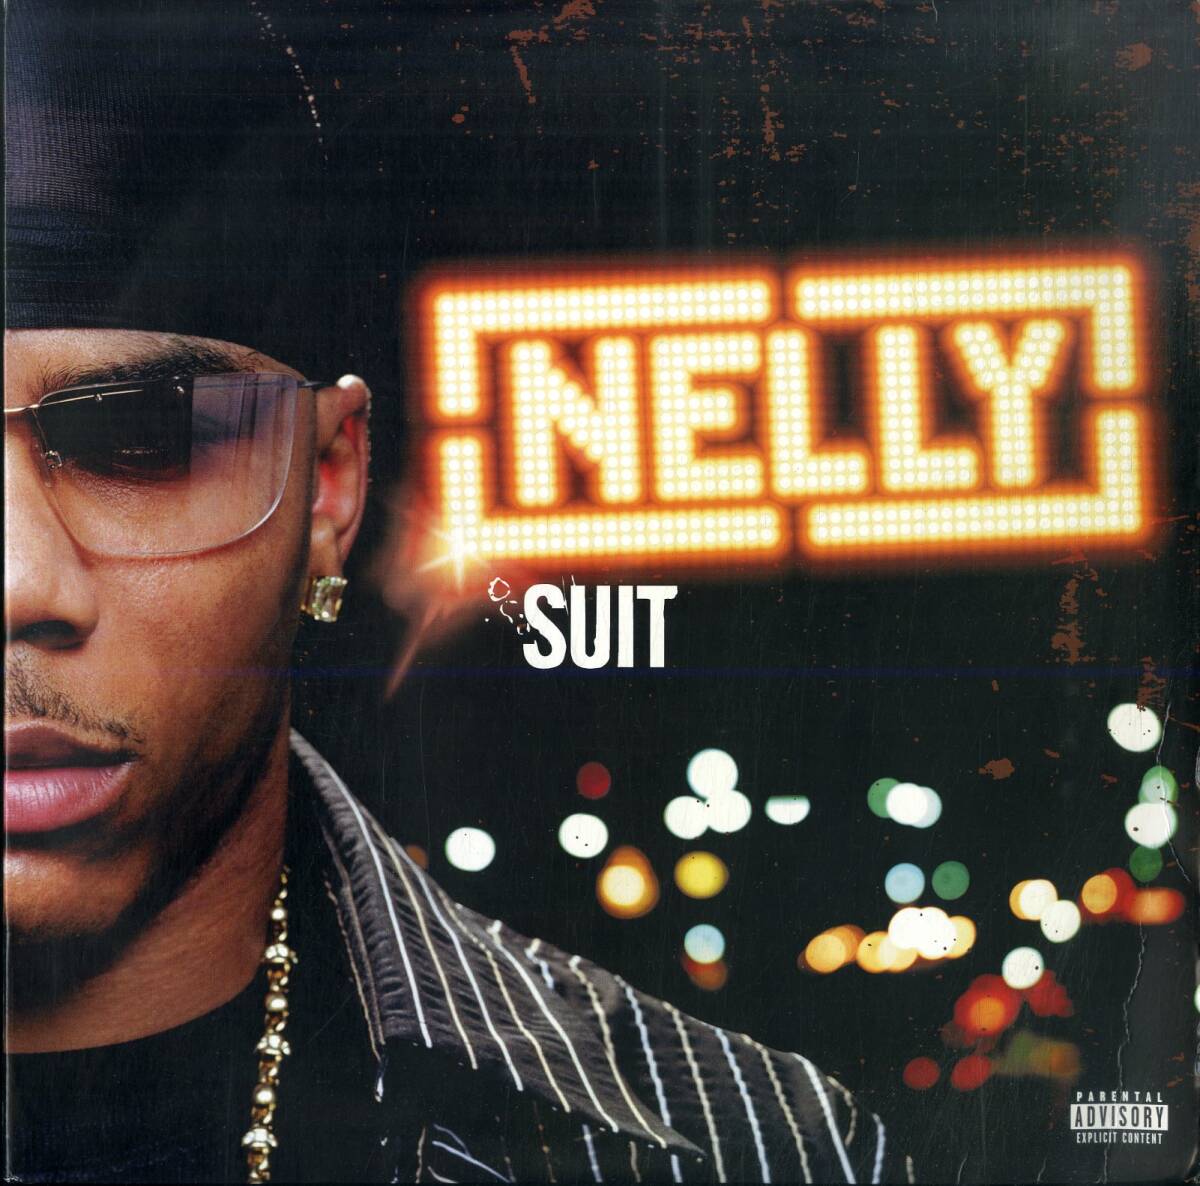 A00593931/LP2枚組/ネリー (NELLY)「Suit (2004年・B0003316-01・ヒップホップ・HIPHOP・ポップラップ)」_画像1